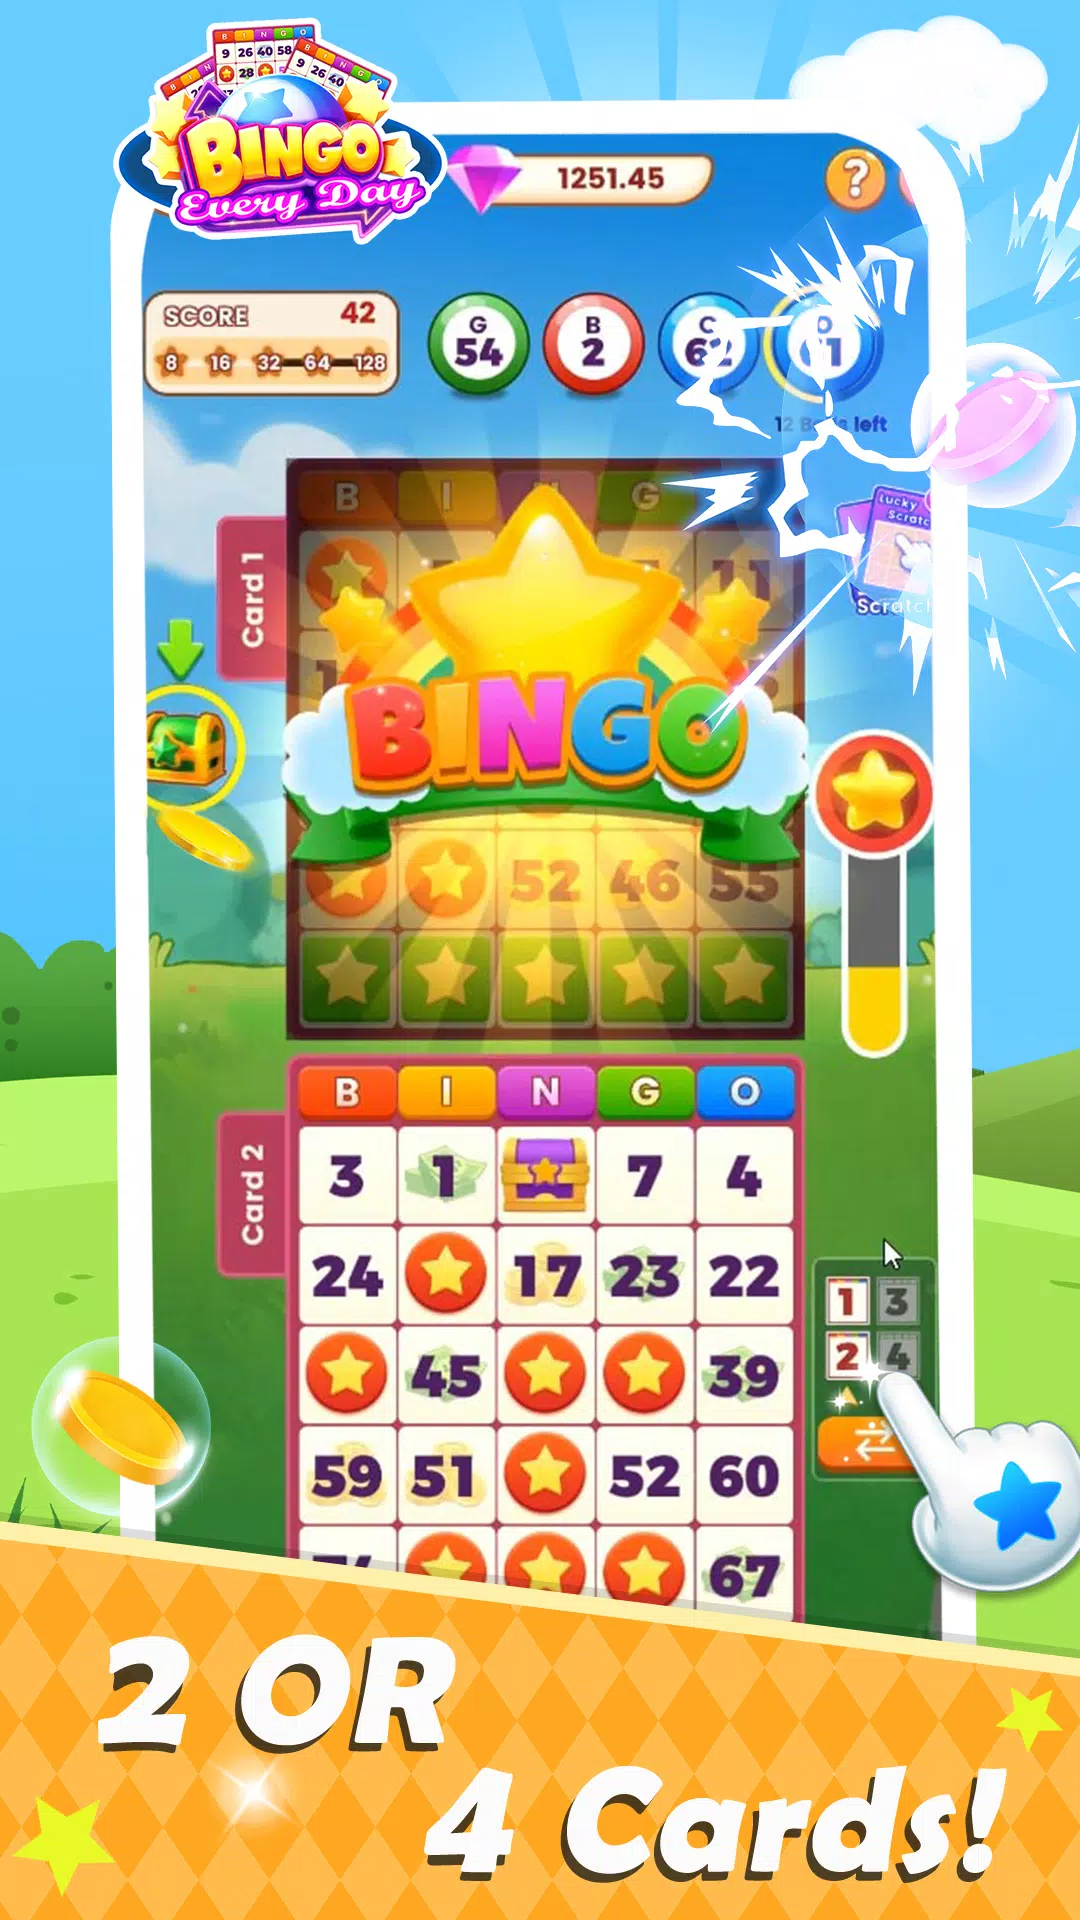 Download do APK de Jogos Divertidos Bingo Online para Android